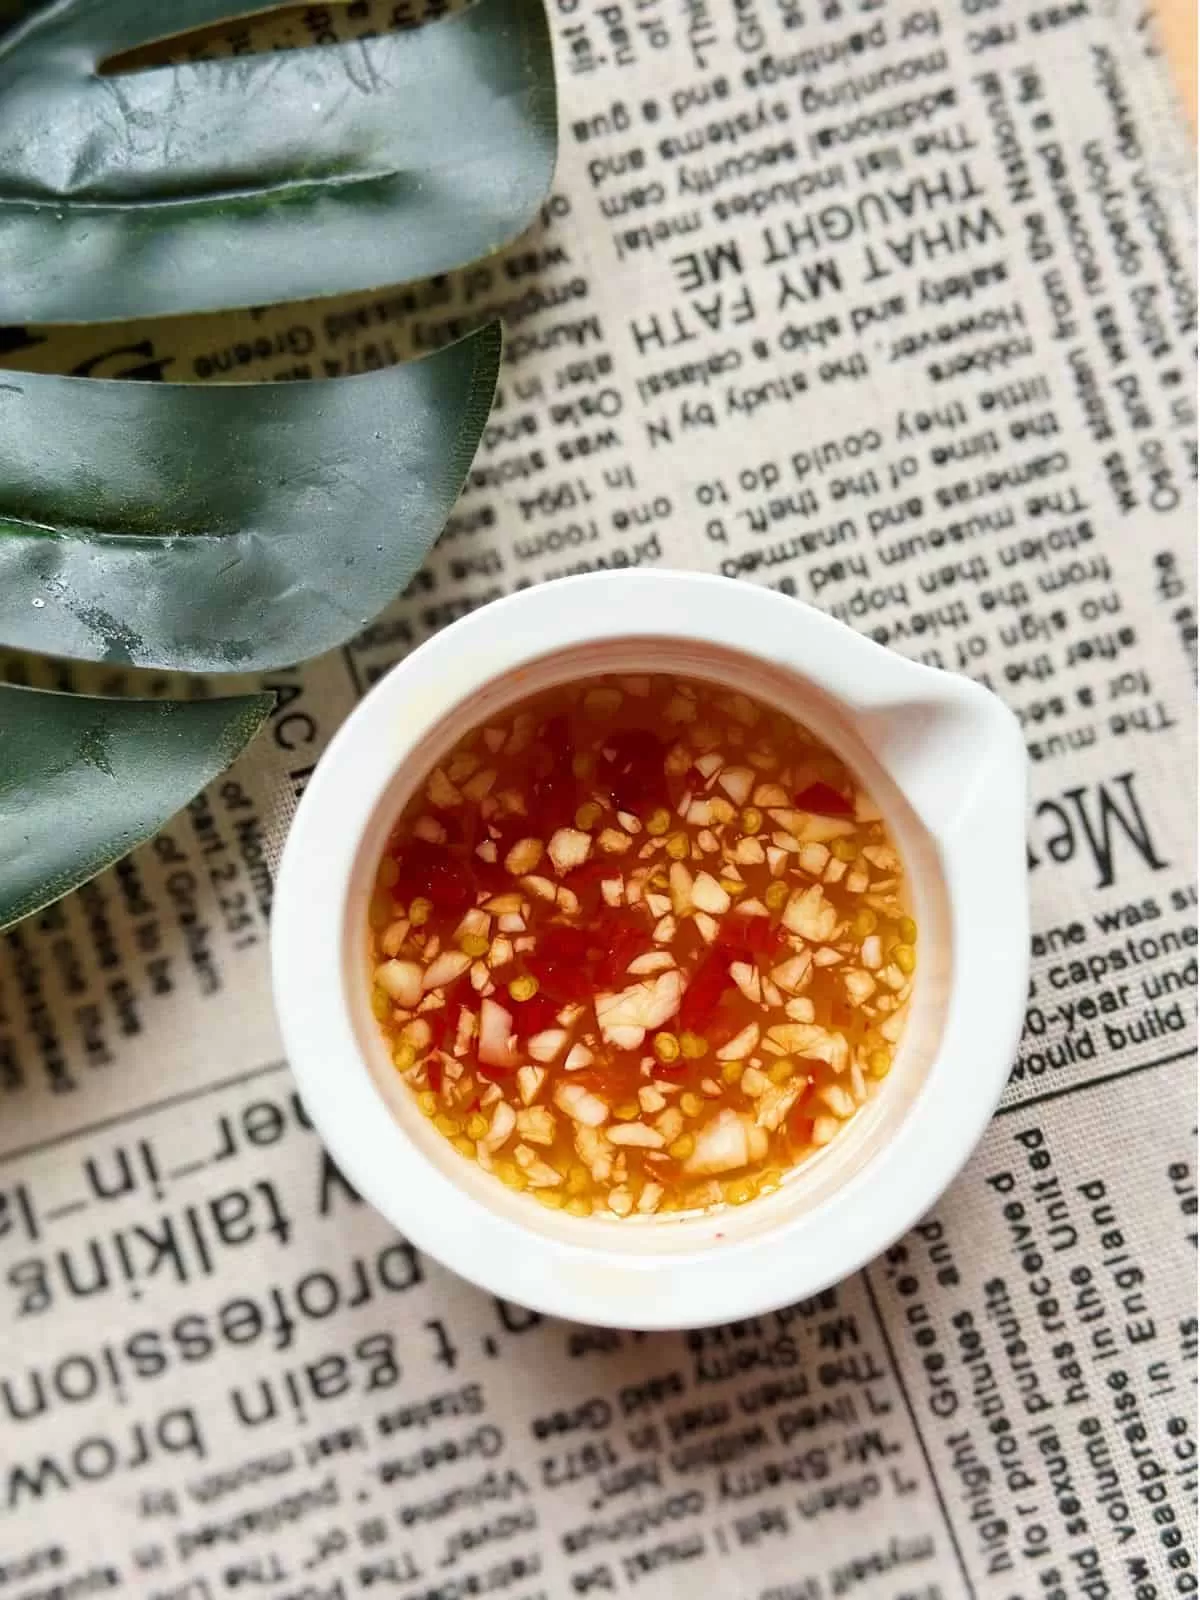 Nuoc Mam (Vietnamese Fish Sauce)